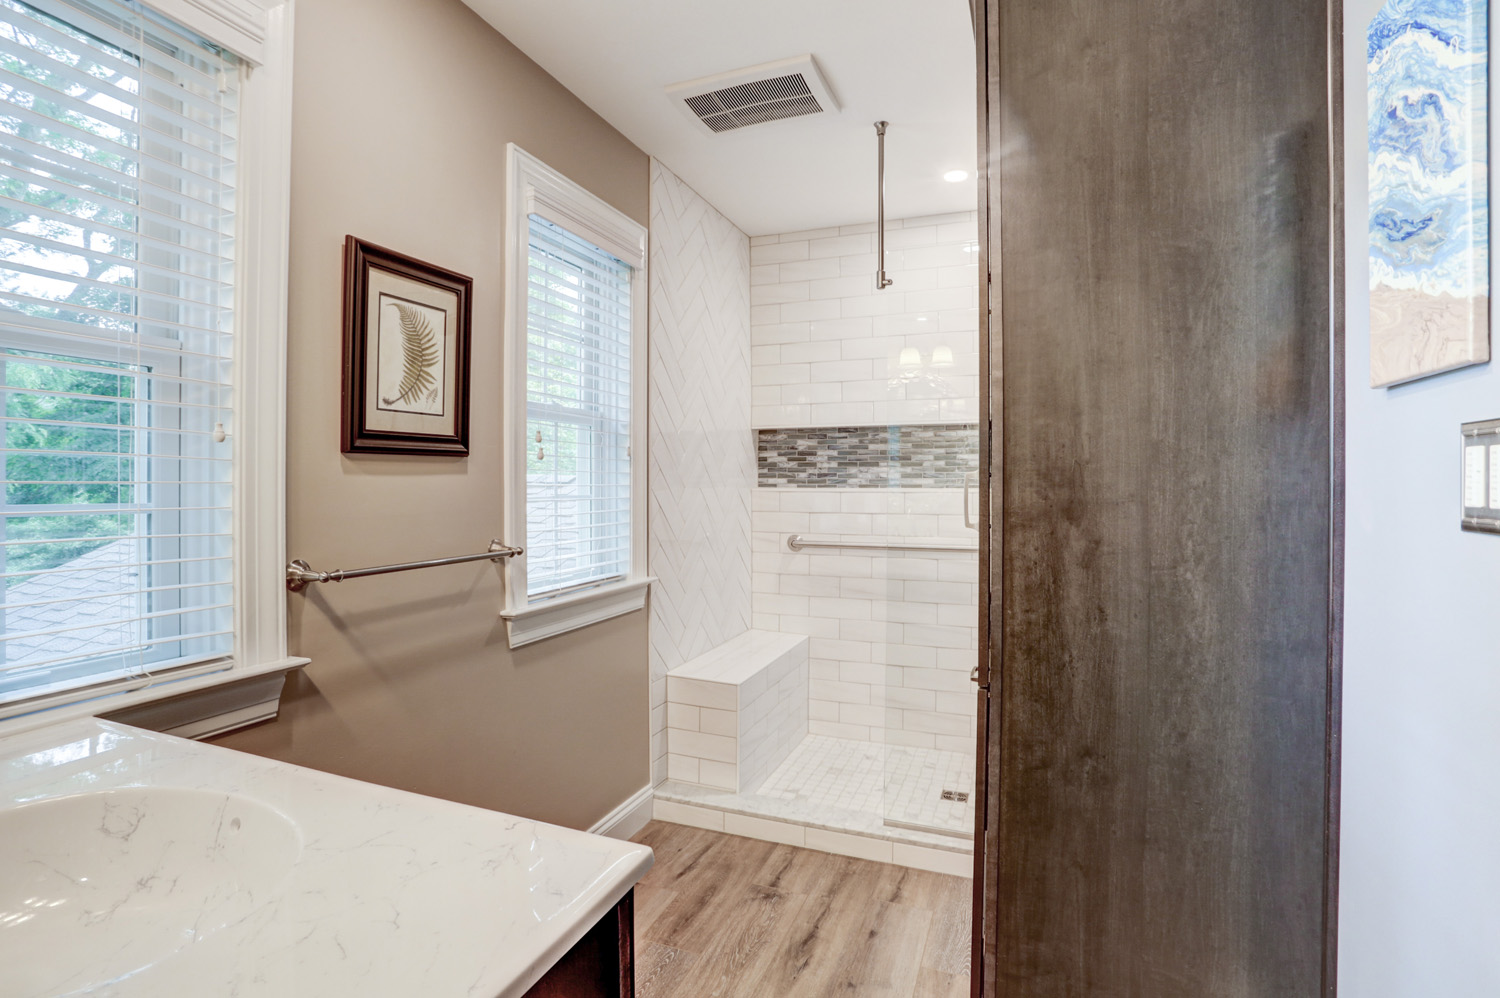 Tile shower in Conestoga Valley master bathroom remodel